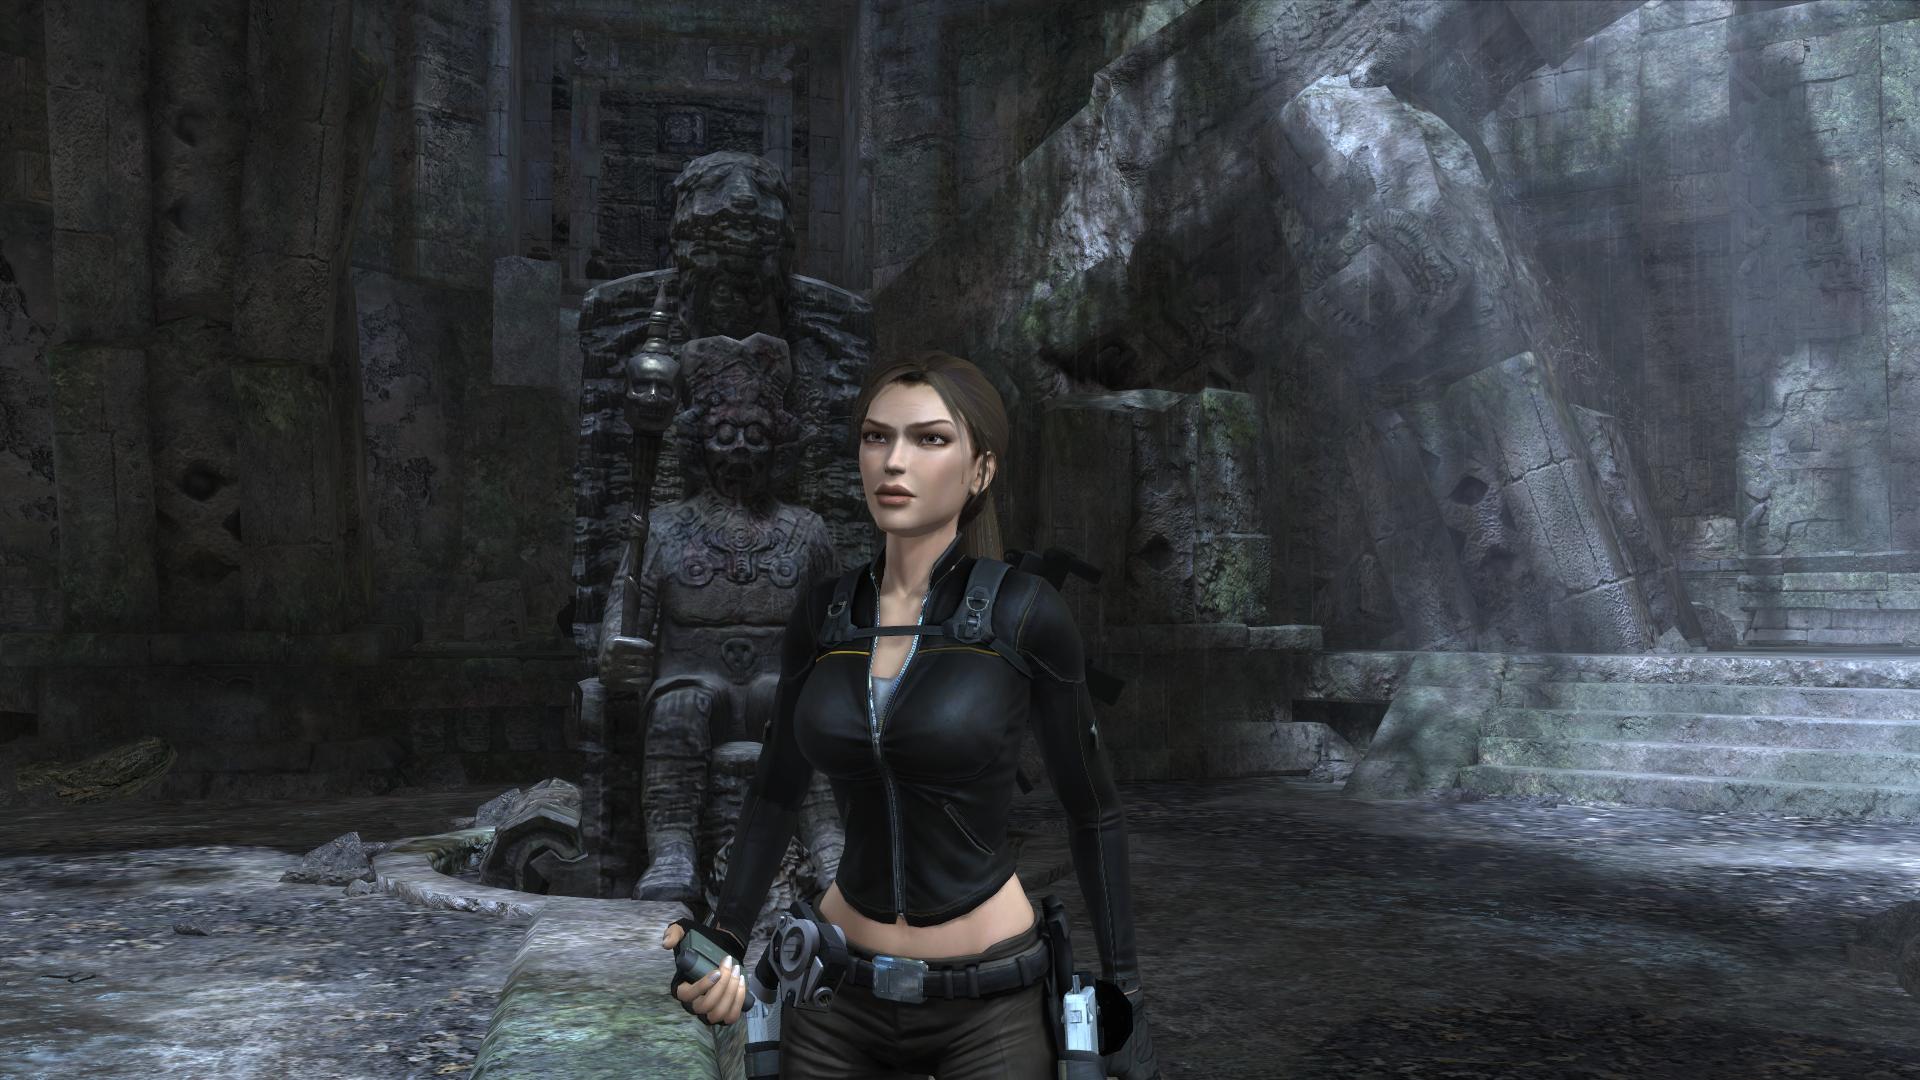 Baixar papel de parede para celular de Tomb Raider, Videogame, Tomb Raider: Underworld gratuito.